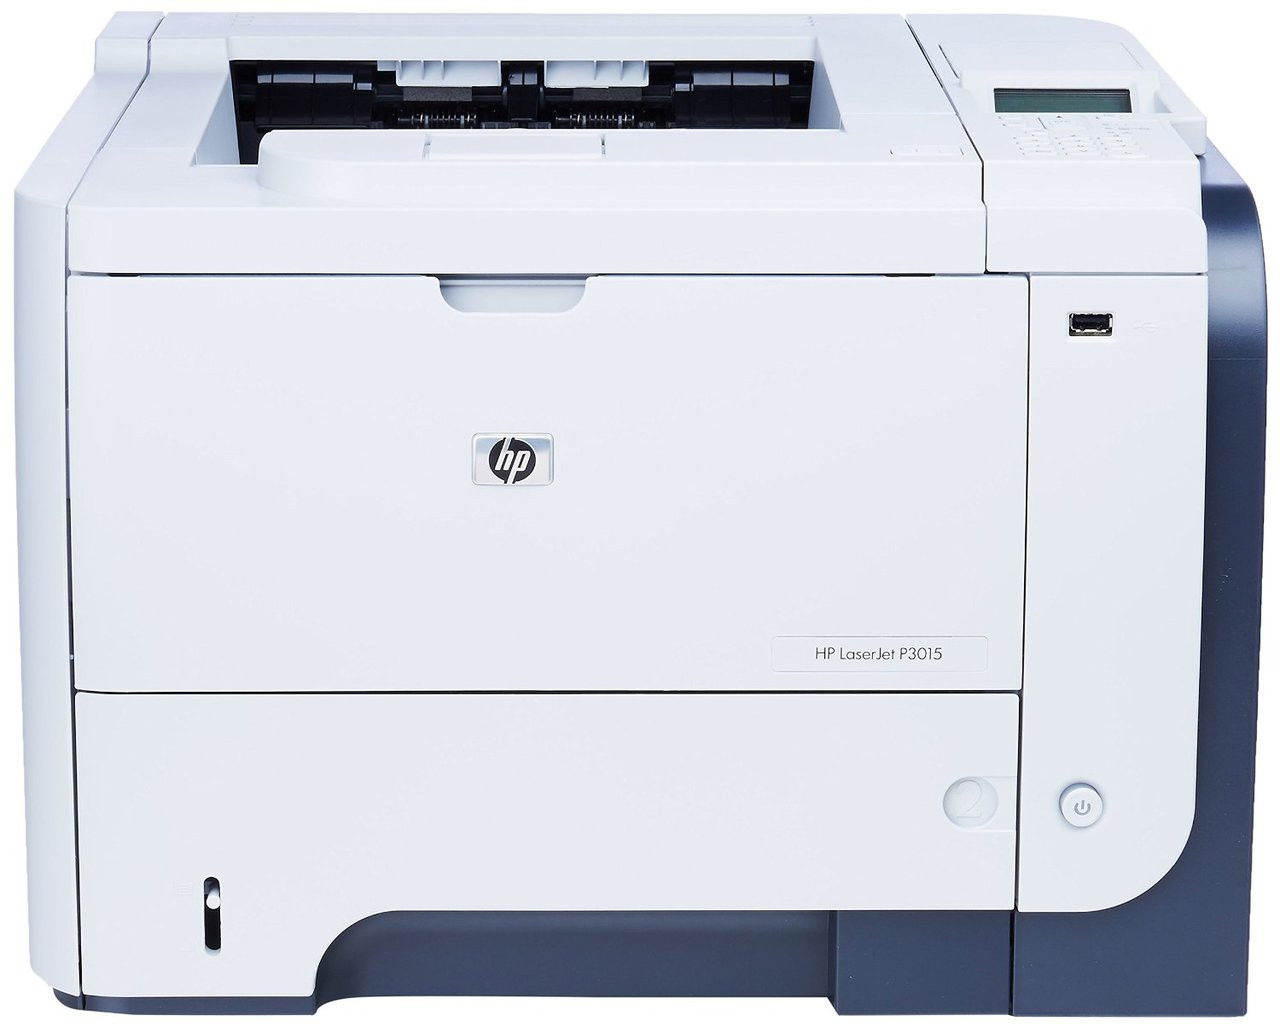 HP LaserJet P3015 - CE525A - HP 3015 Printer for sale